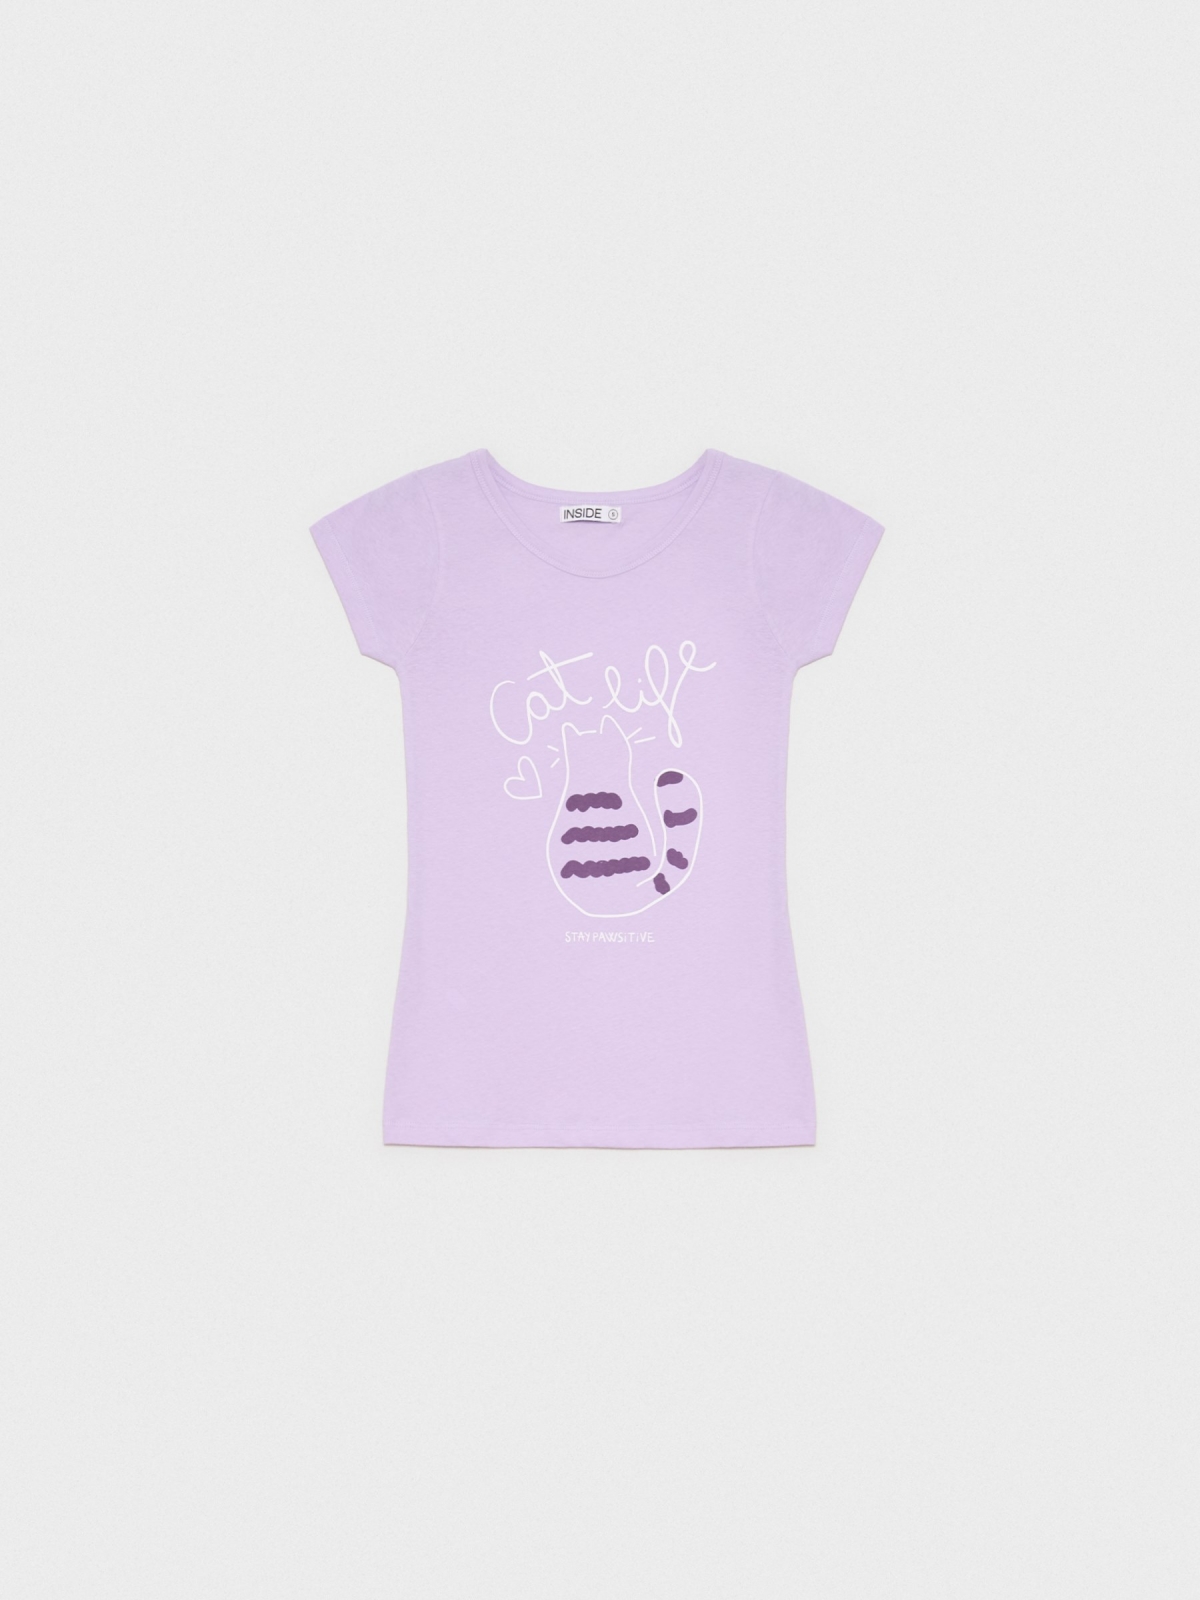  Cat life T-shirt mauve